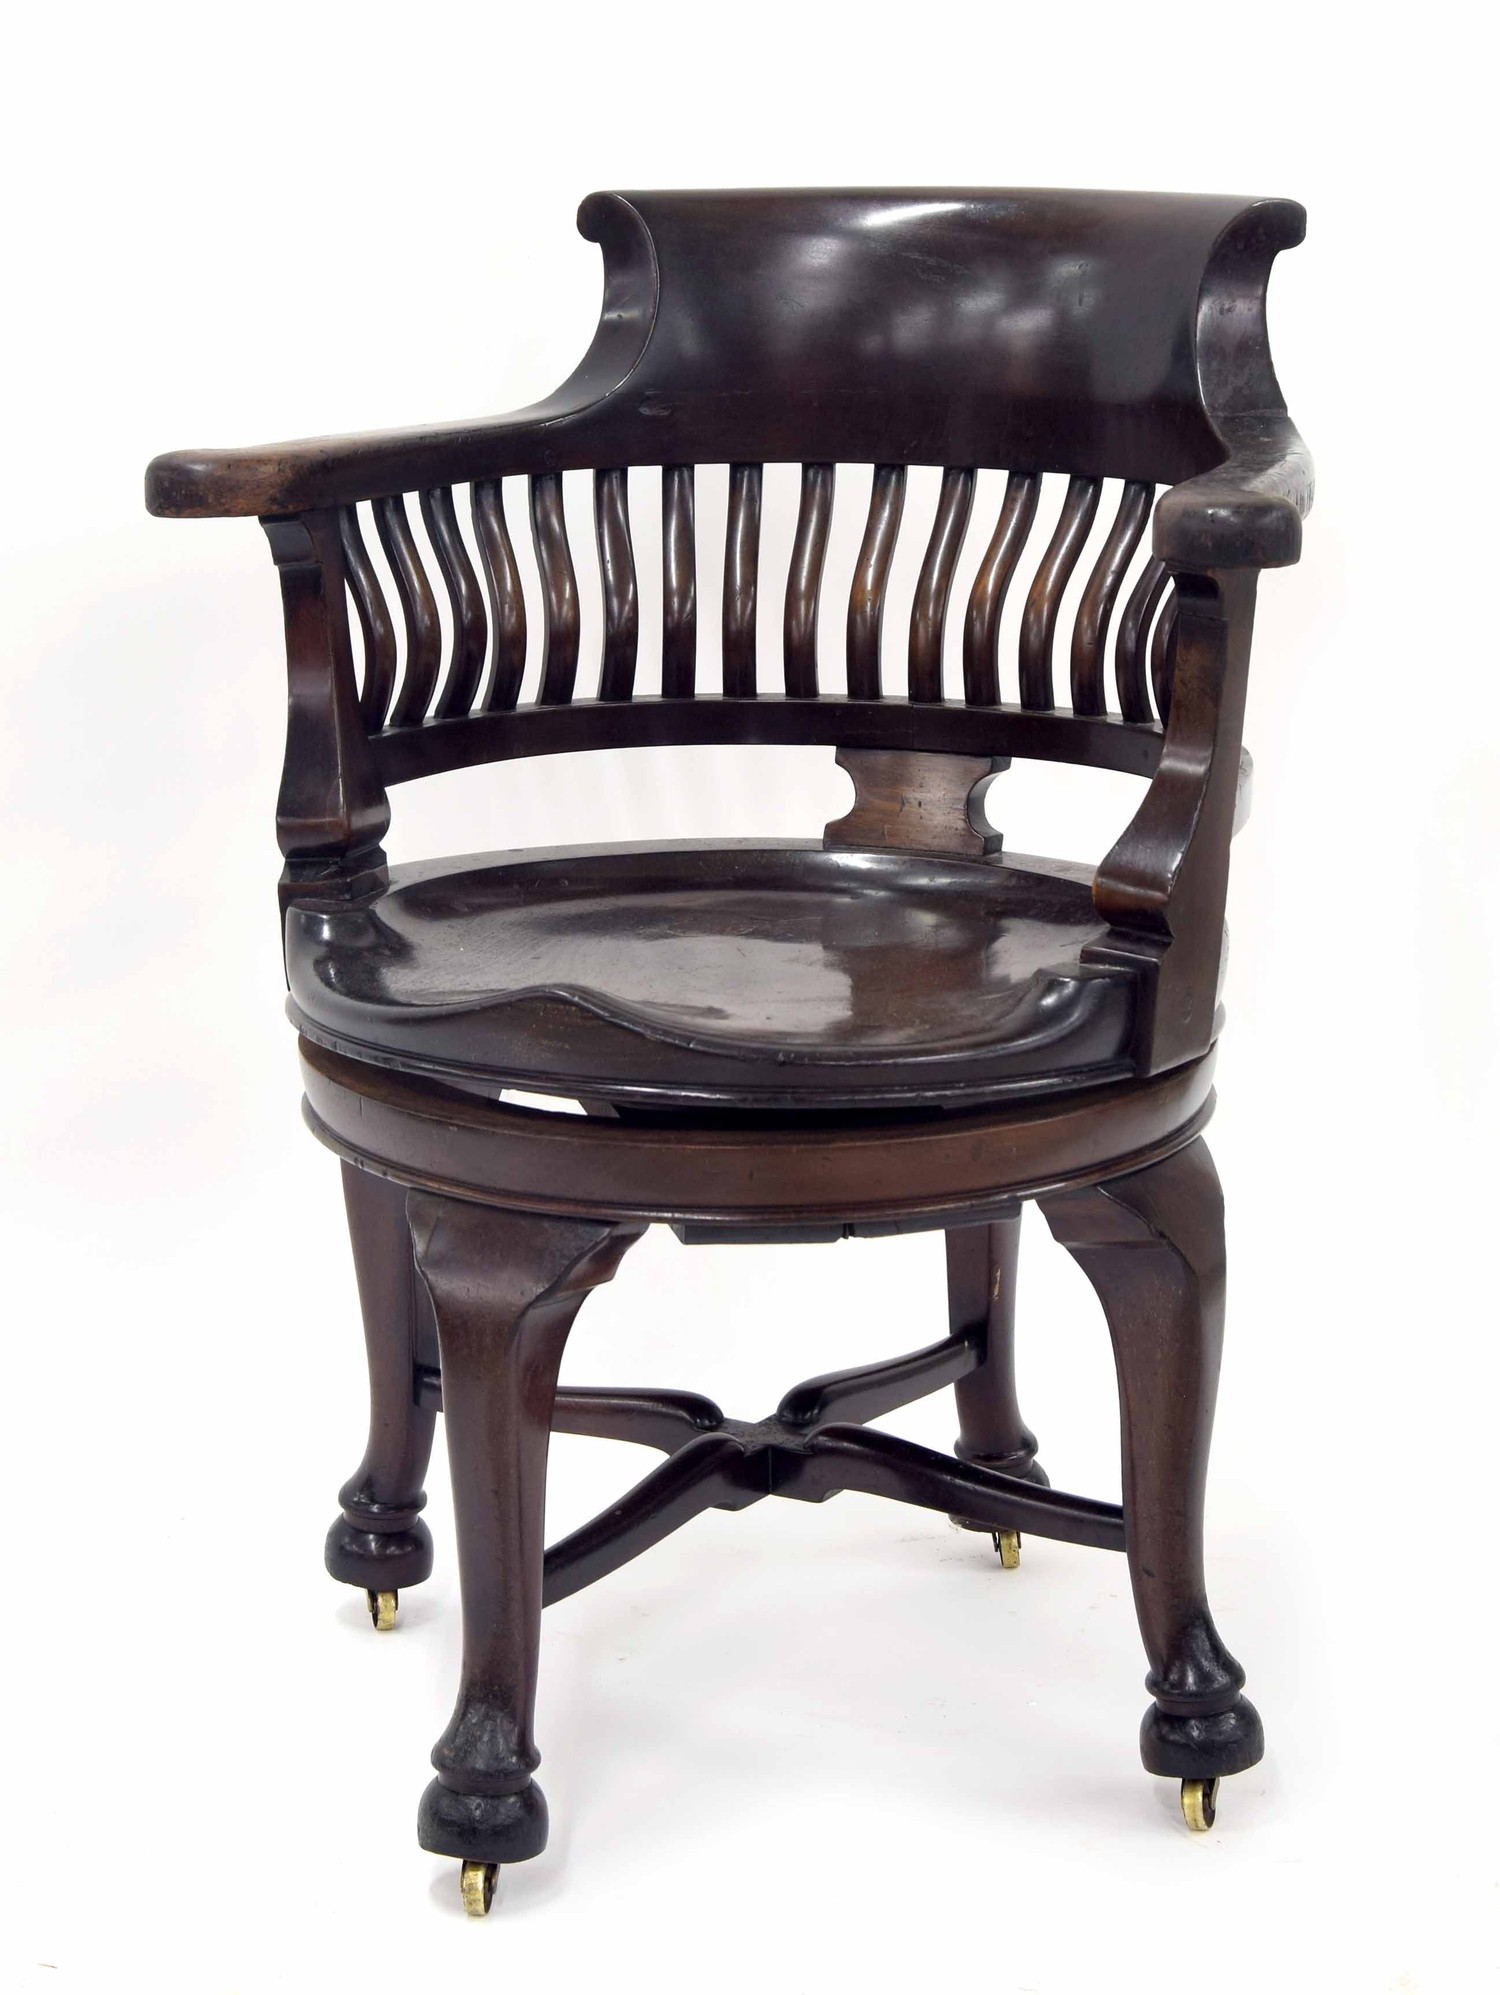 Edwardian mahogany captain's/swivel desk chair, 26" wide, seat 18" high, back 34" high